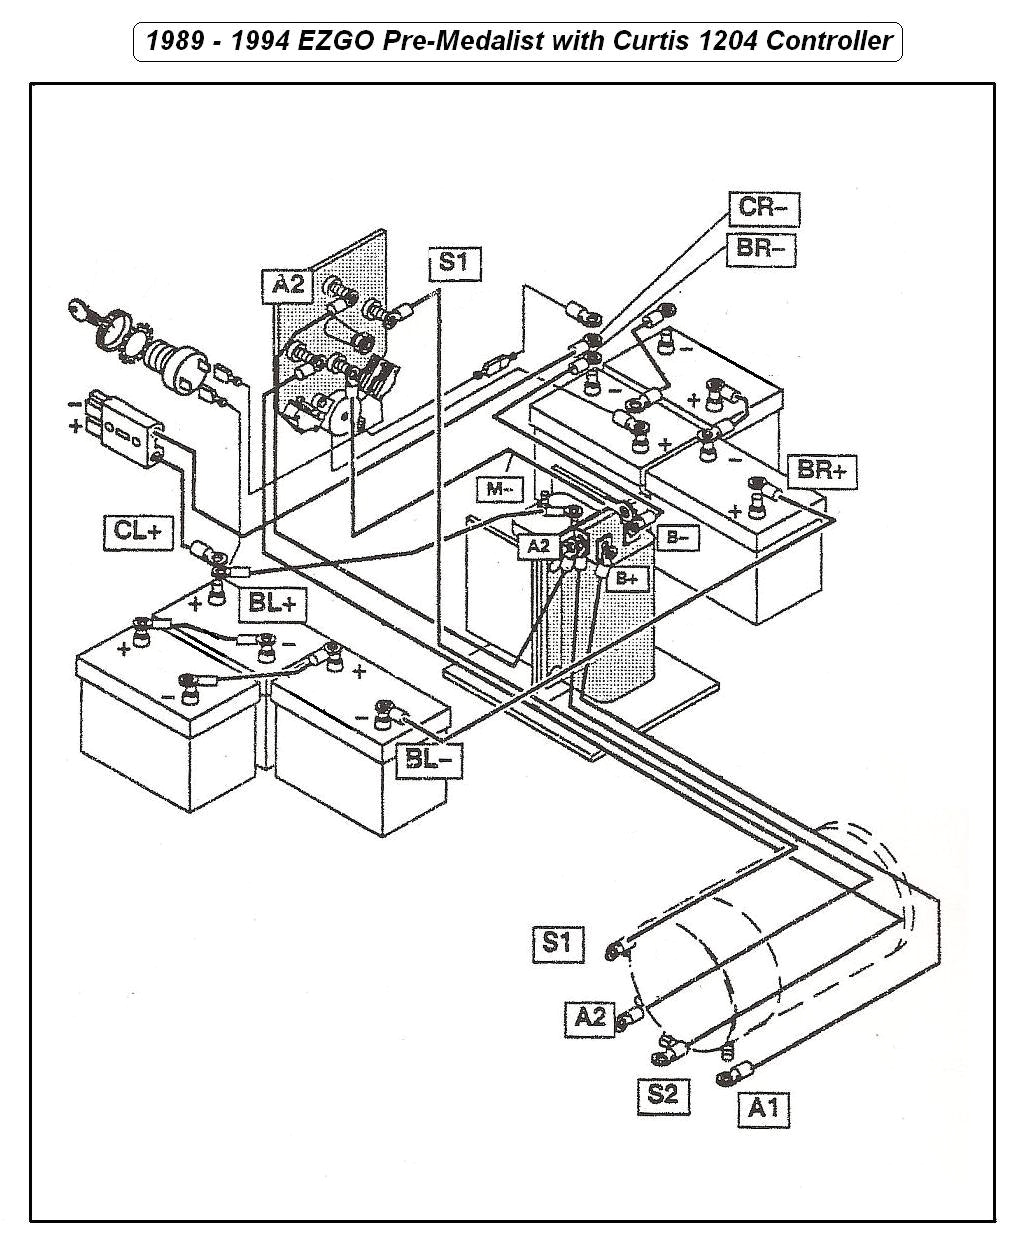 1976 ezgo wiring diagram wiring diagram datasource 1976 ezgo wiring diagram